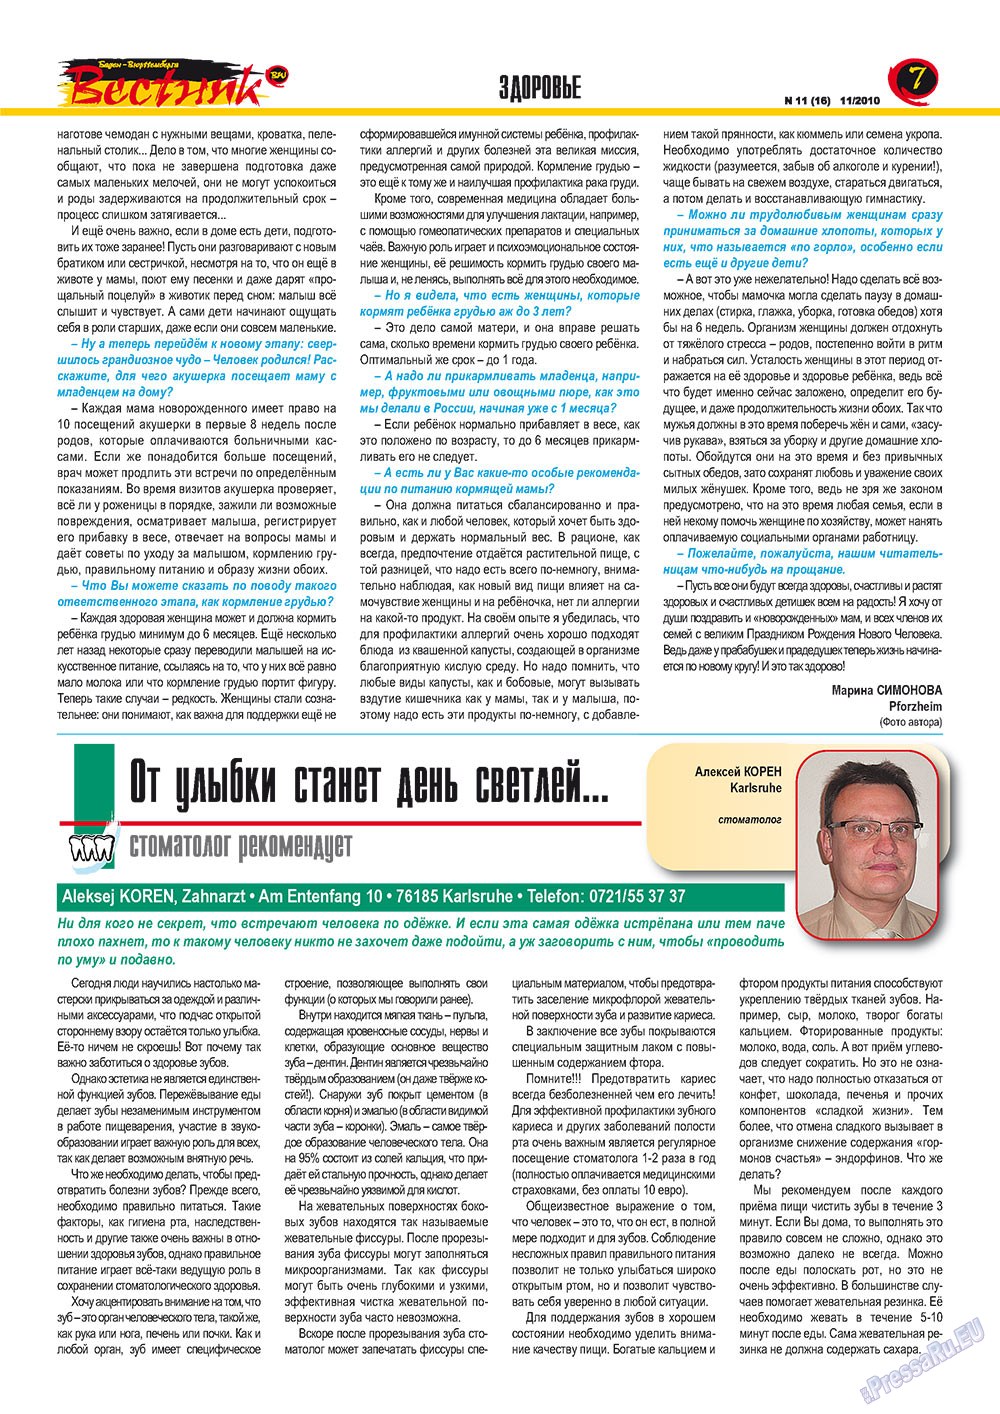 Вестник-info (журнал). 2010 год, номер 11, стр. 7